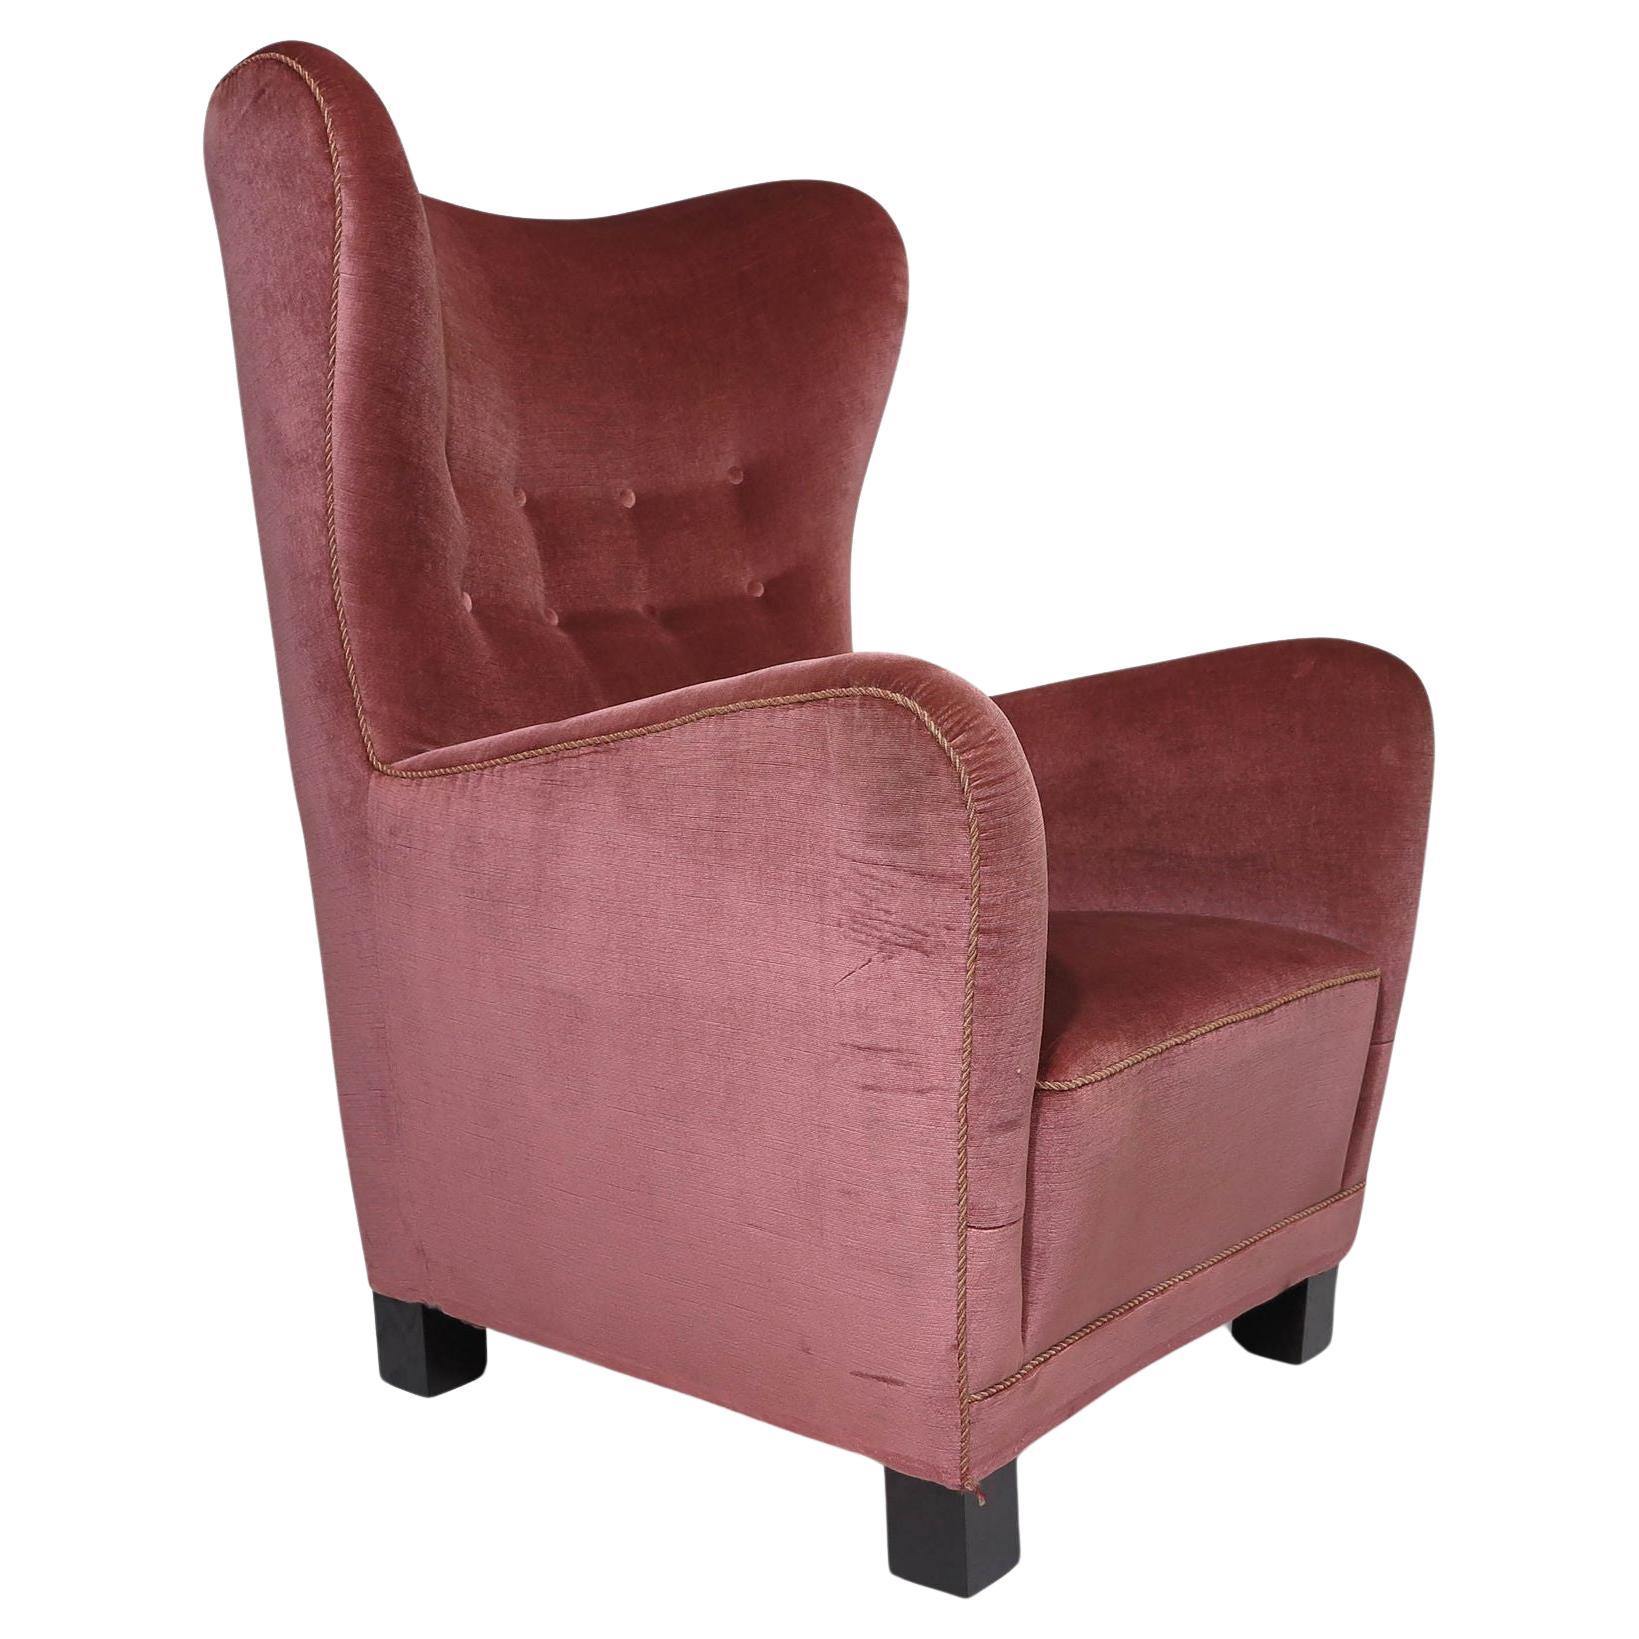 1942 Fritz Hansen High-back Lounge Chair #1672 in Original Mohair For Sale